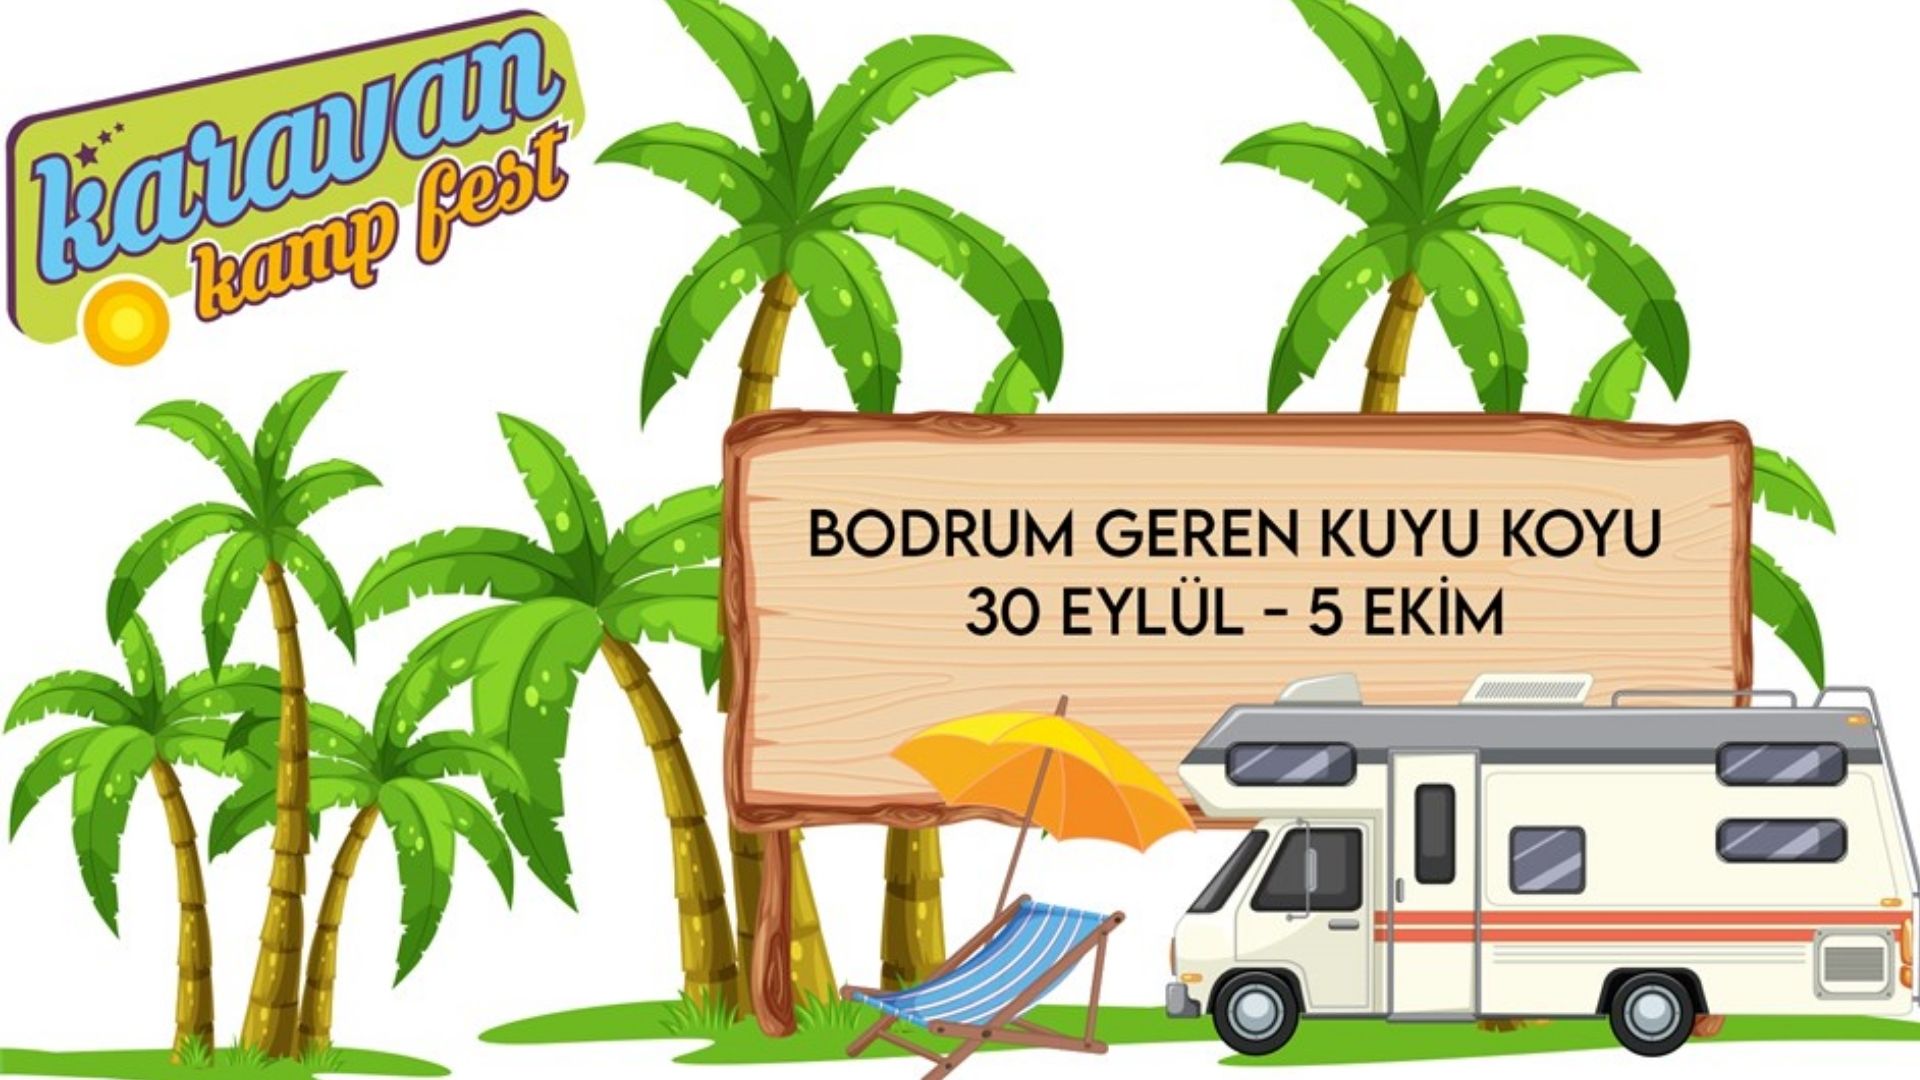 Bodrum Karavan Kamp Fest 2022 festival